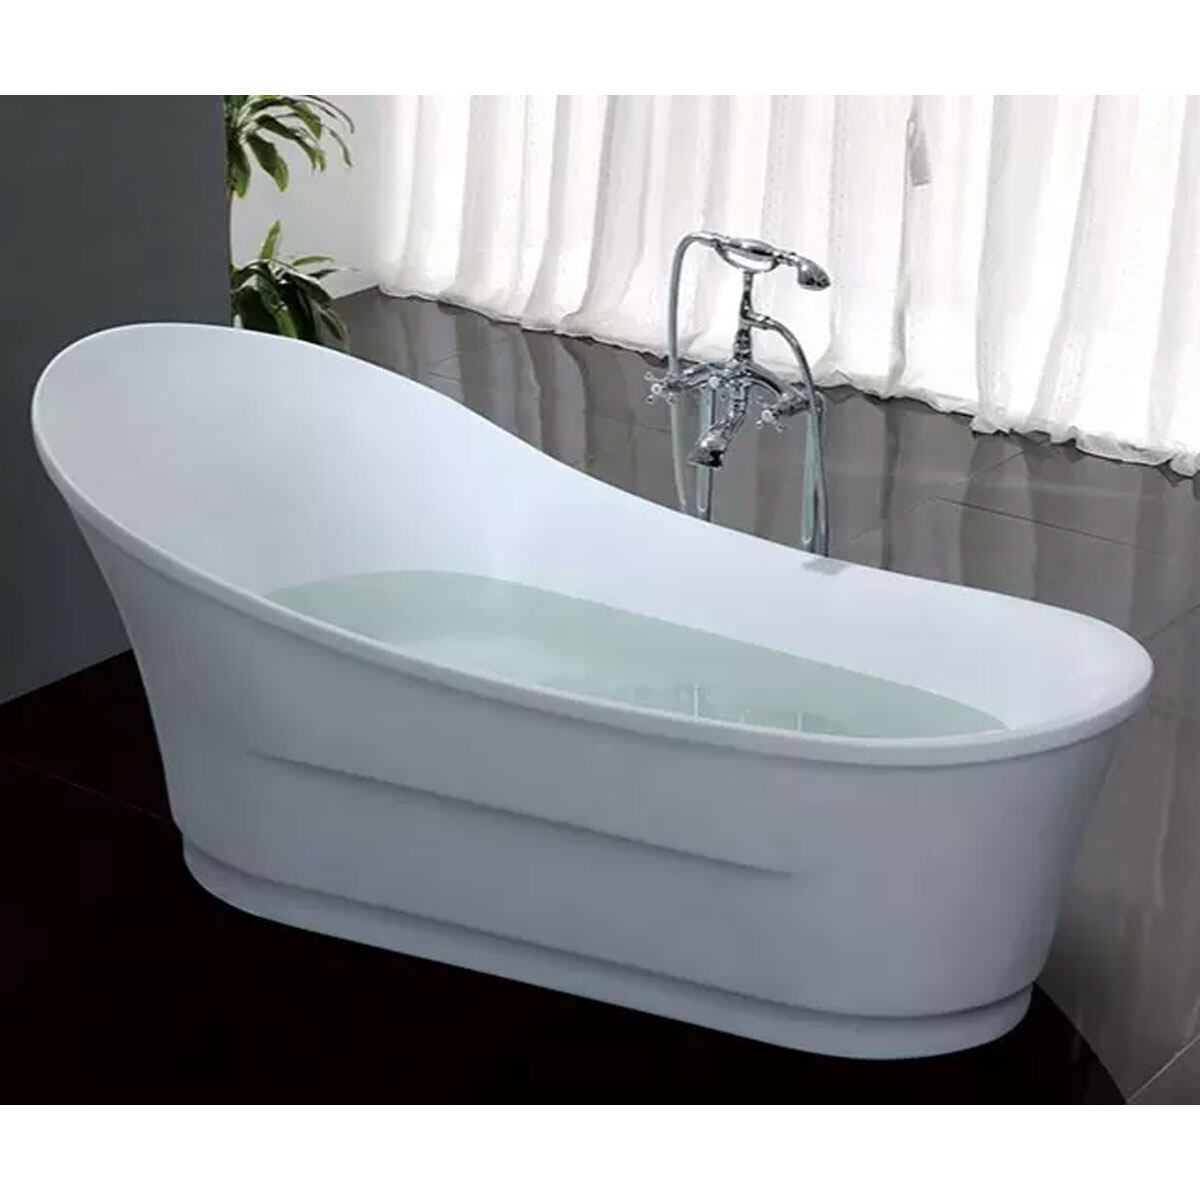 bathtub wholesale suppliers, bathtubs factory direct, bathtubs for sale online, bathtubs lowes for sale, bathtubs wholesale